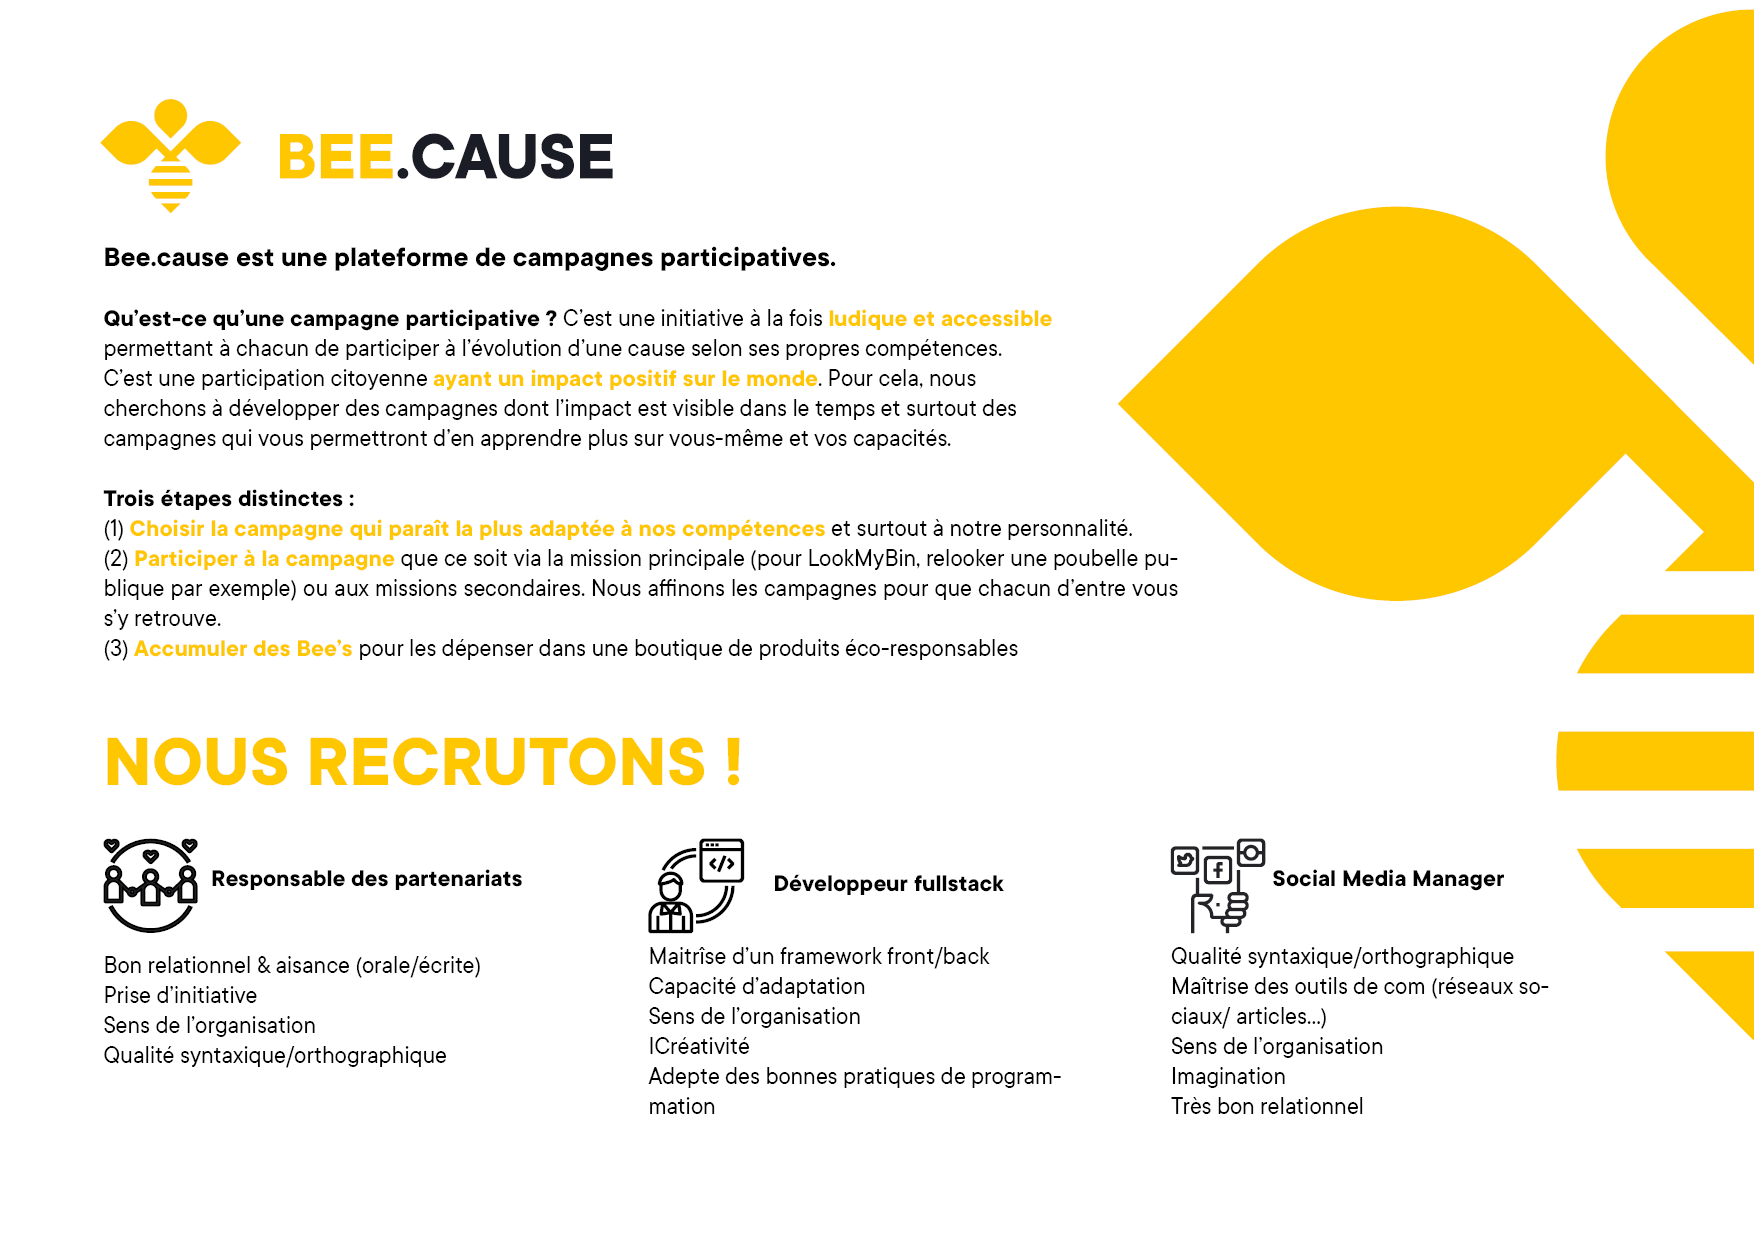 Bee.Cause recrute